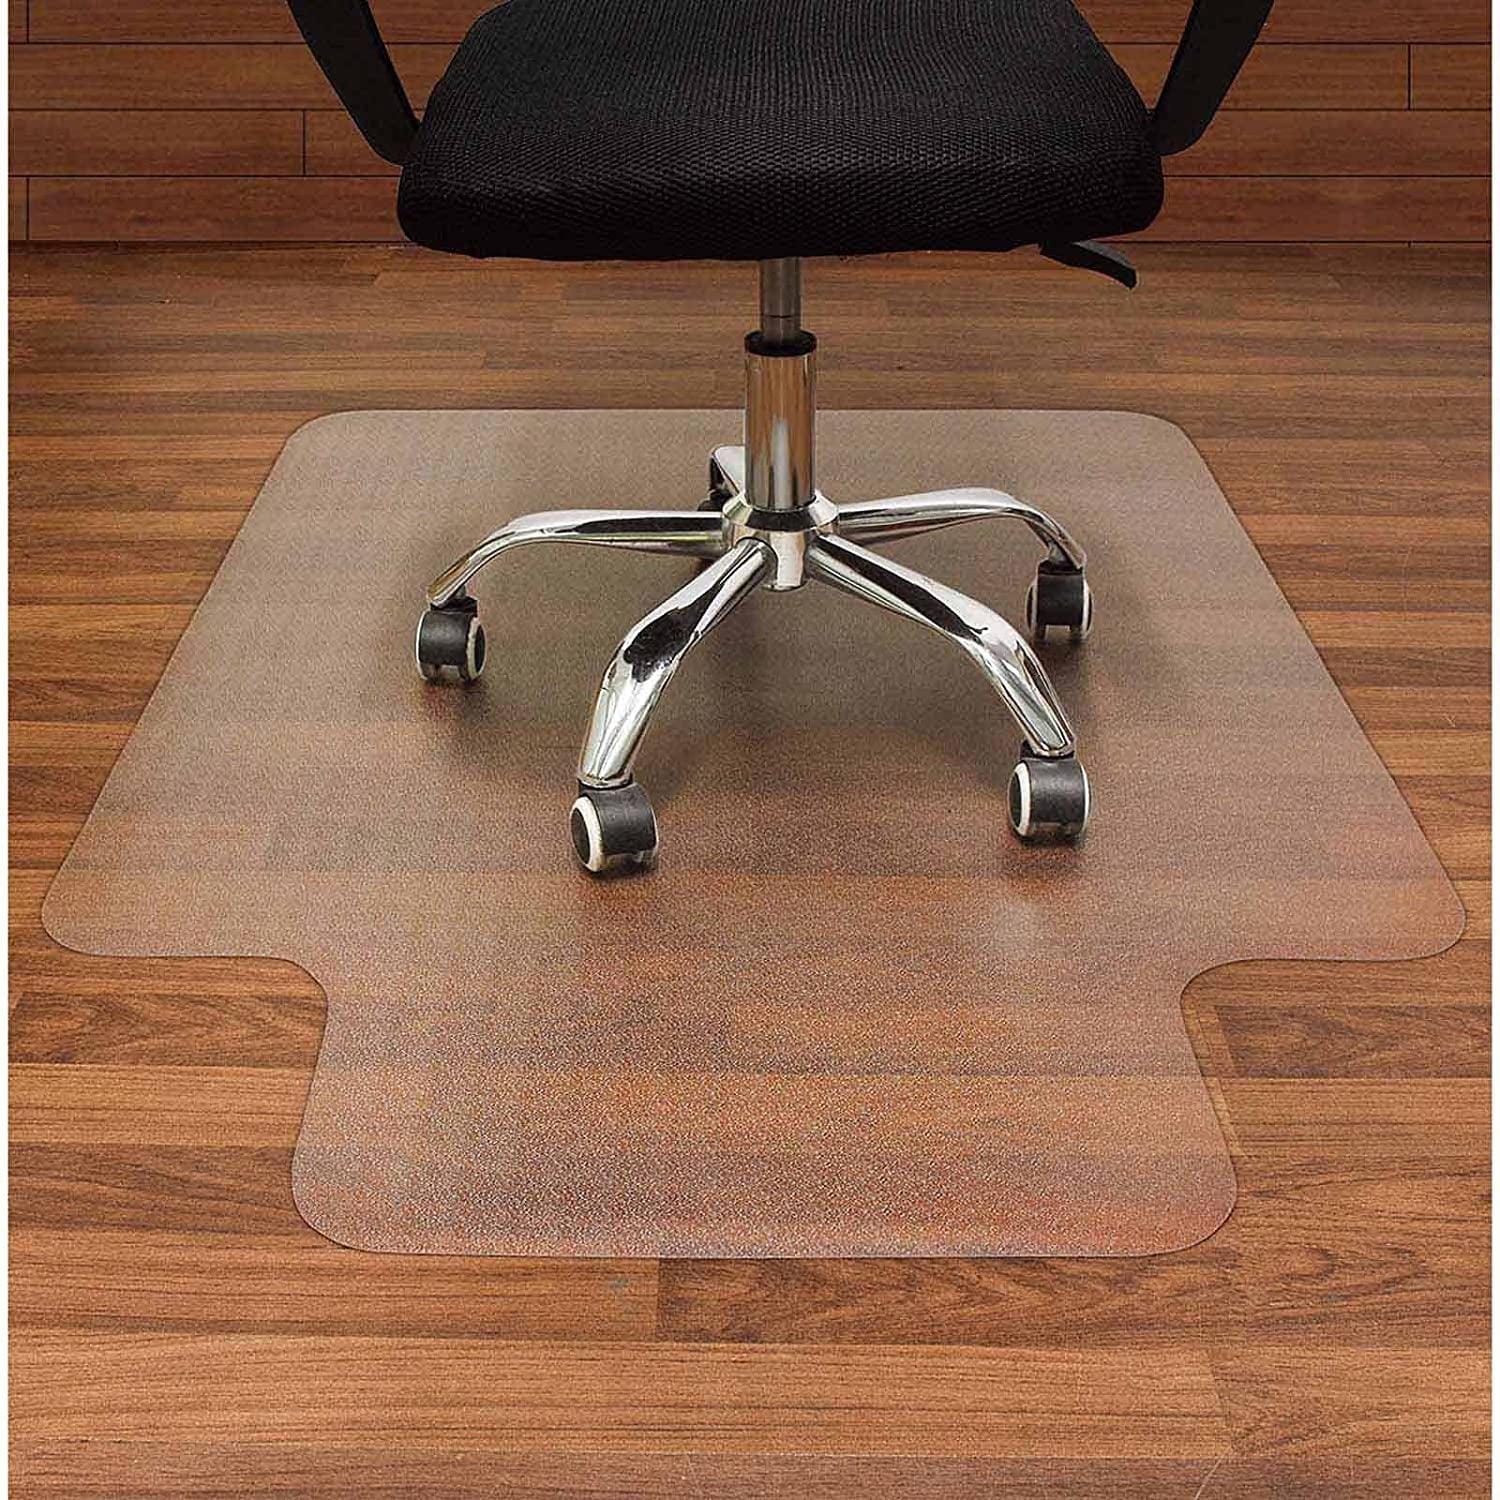 CHAIR FLOOR MAT 47 X 47 PVC Non Slip Smooth Clear High Office Rolling Carpet Mat 